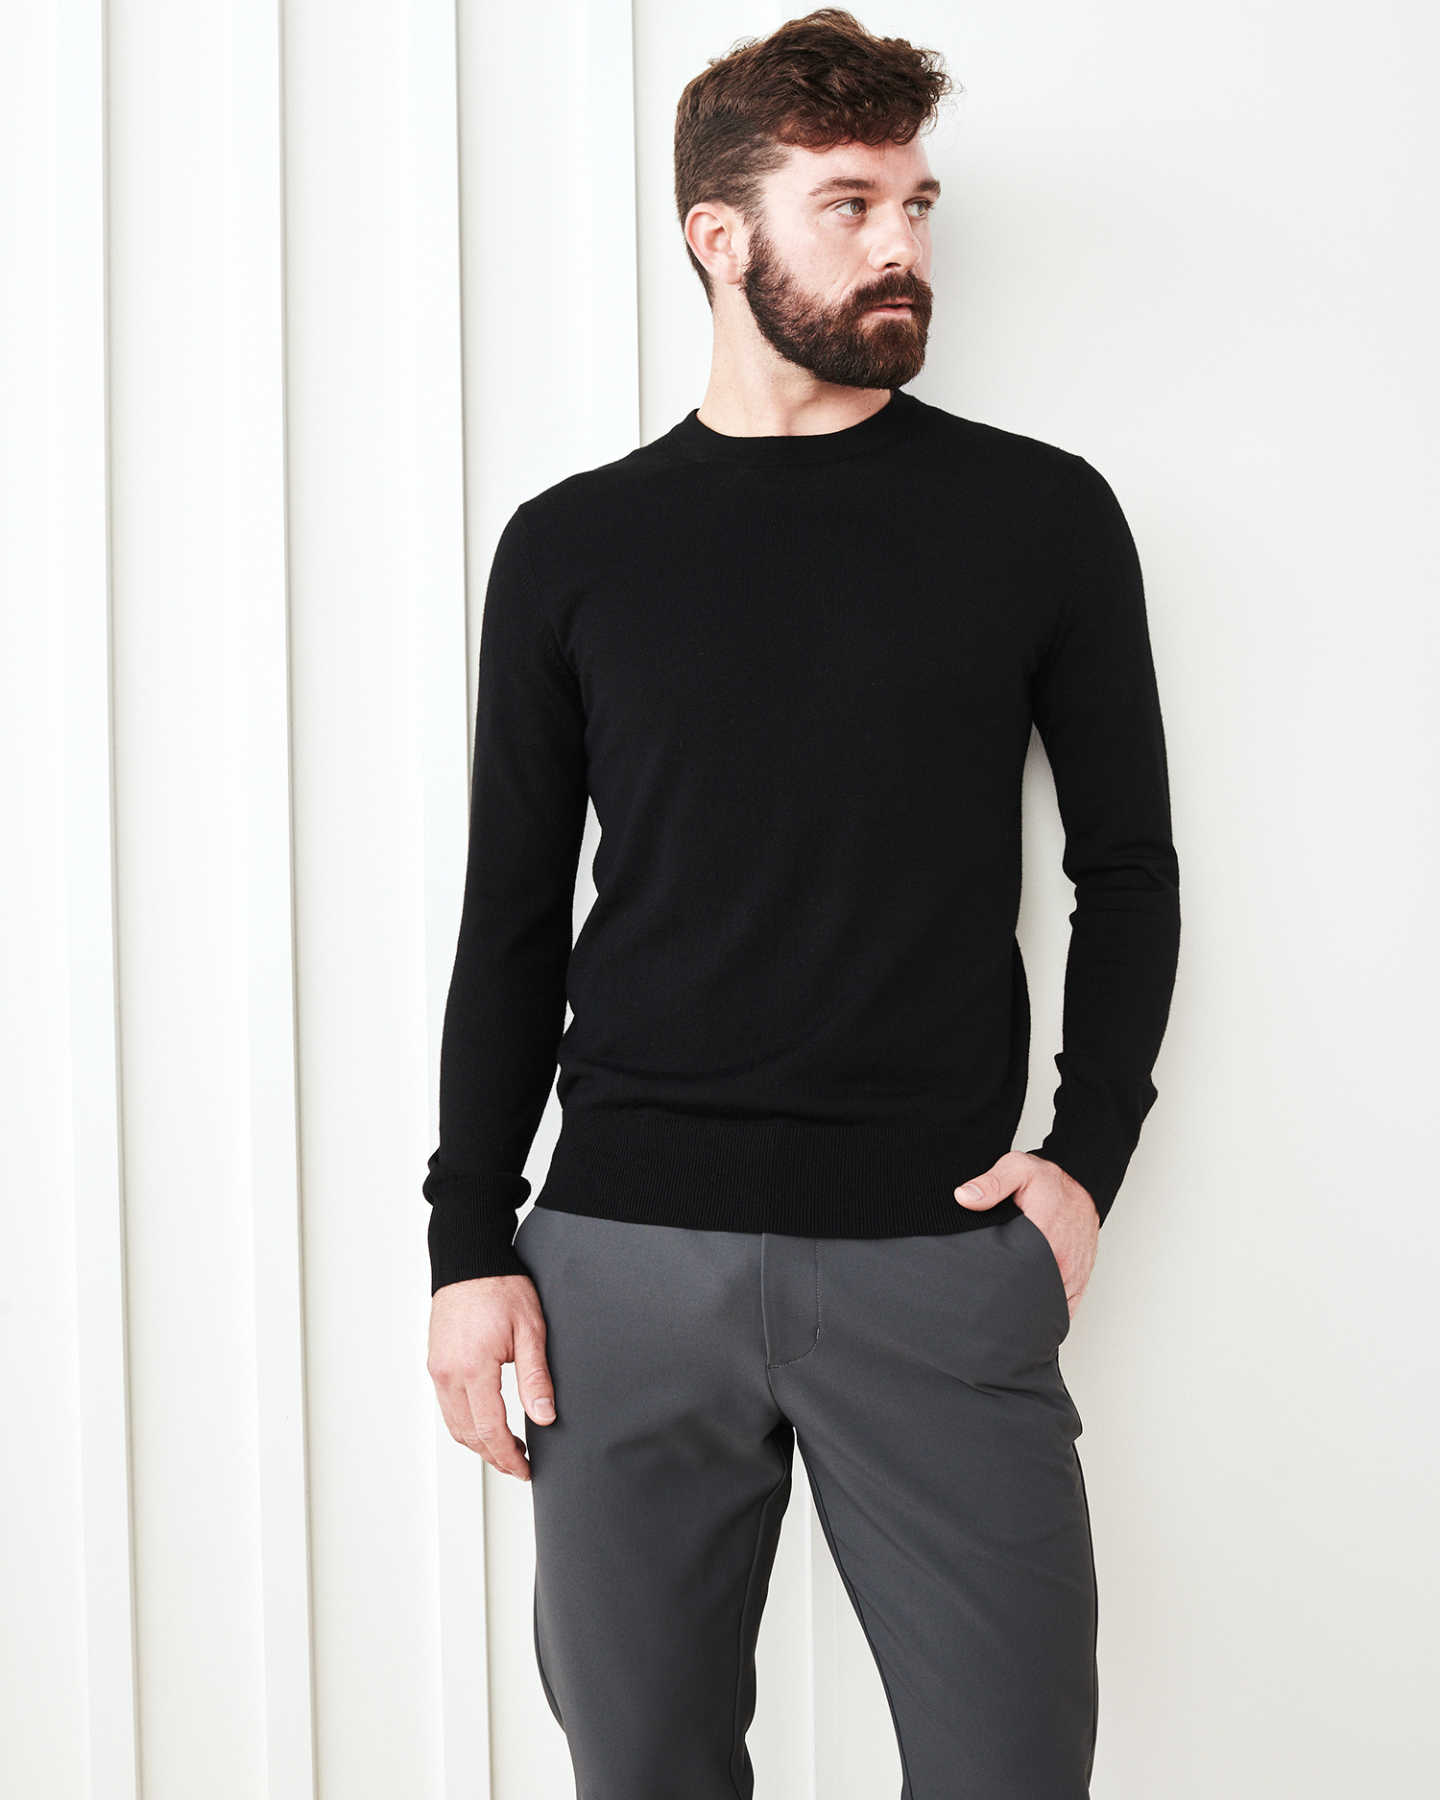 You May Also Like - Australian Merino Wool Crew Sweater - Black